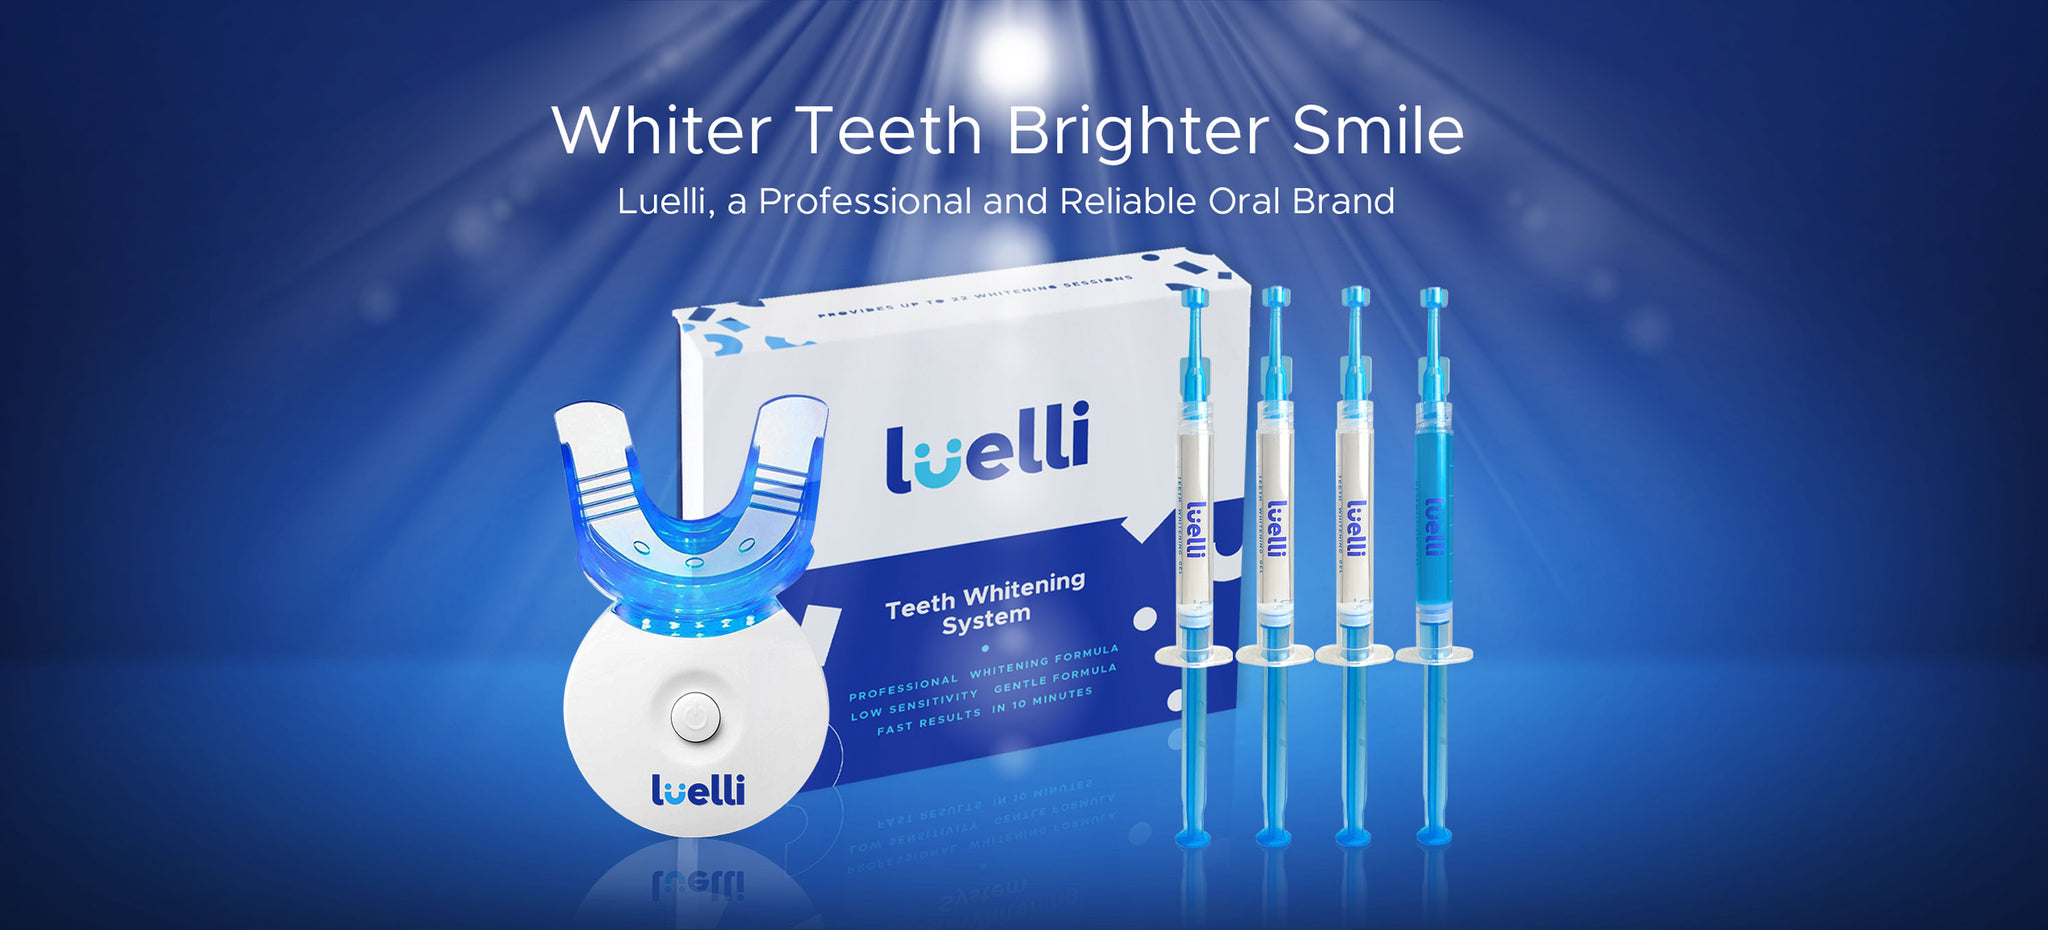 Whiter Teeth Brighter Smile